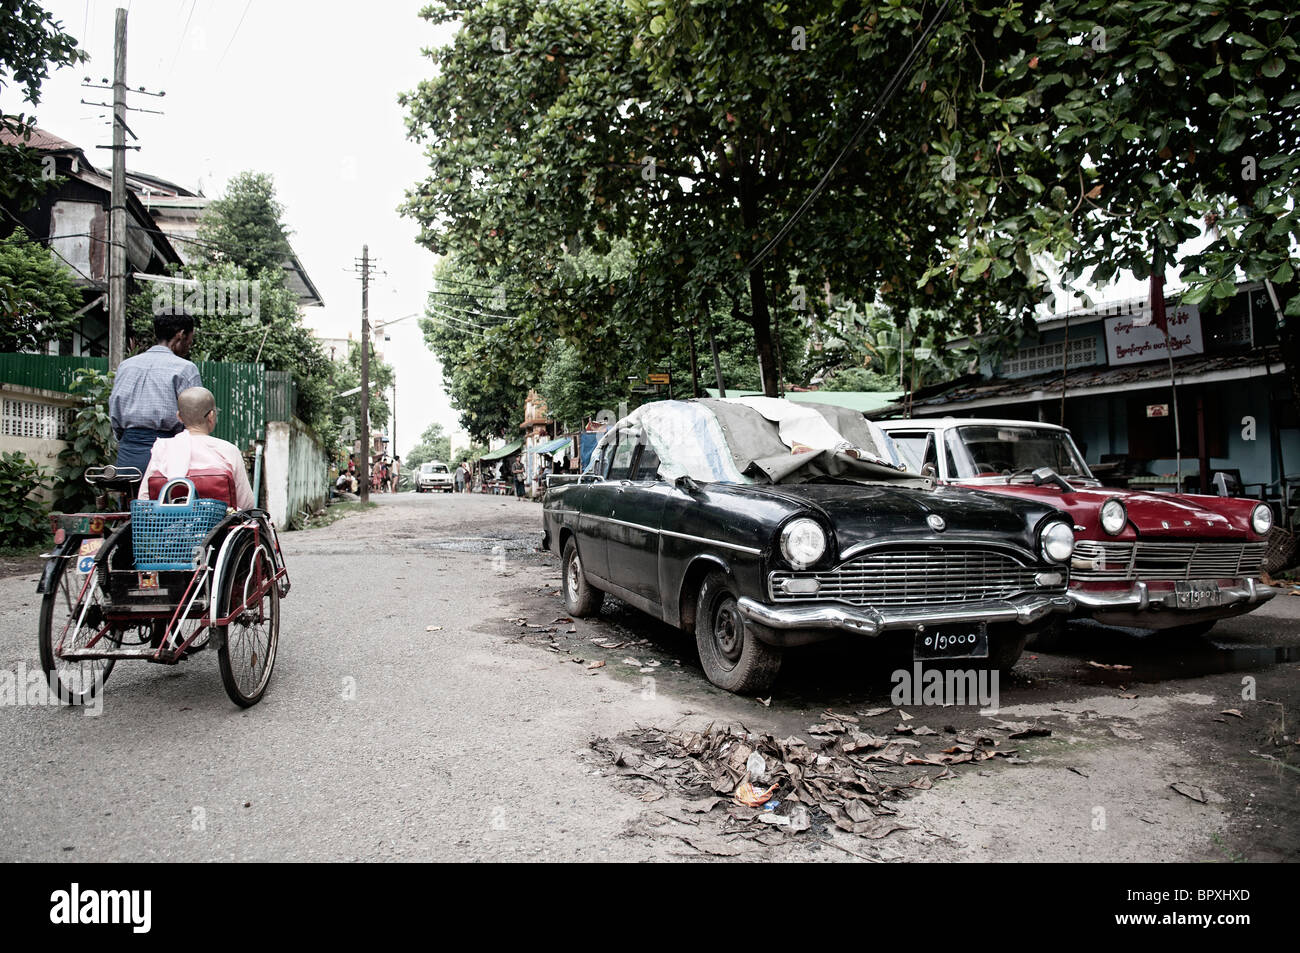 rickshaw and old vintage cars on street Myanmar Burma Yangon Asia Stock Photo